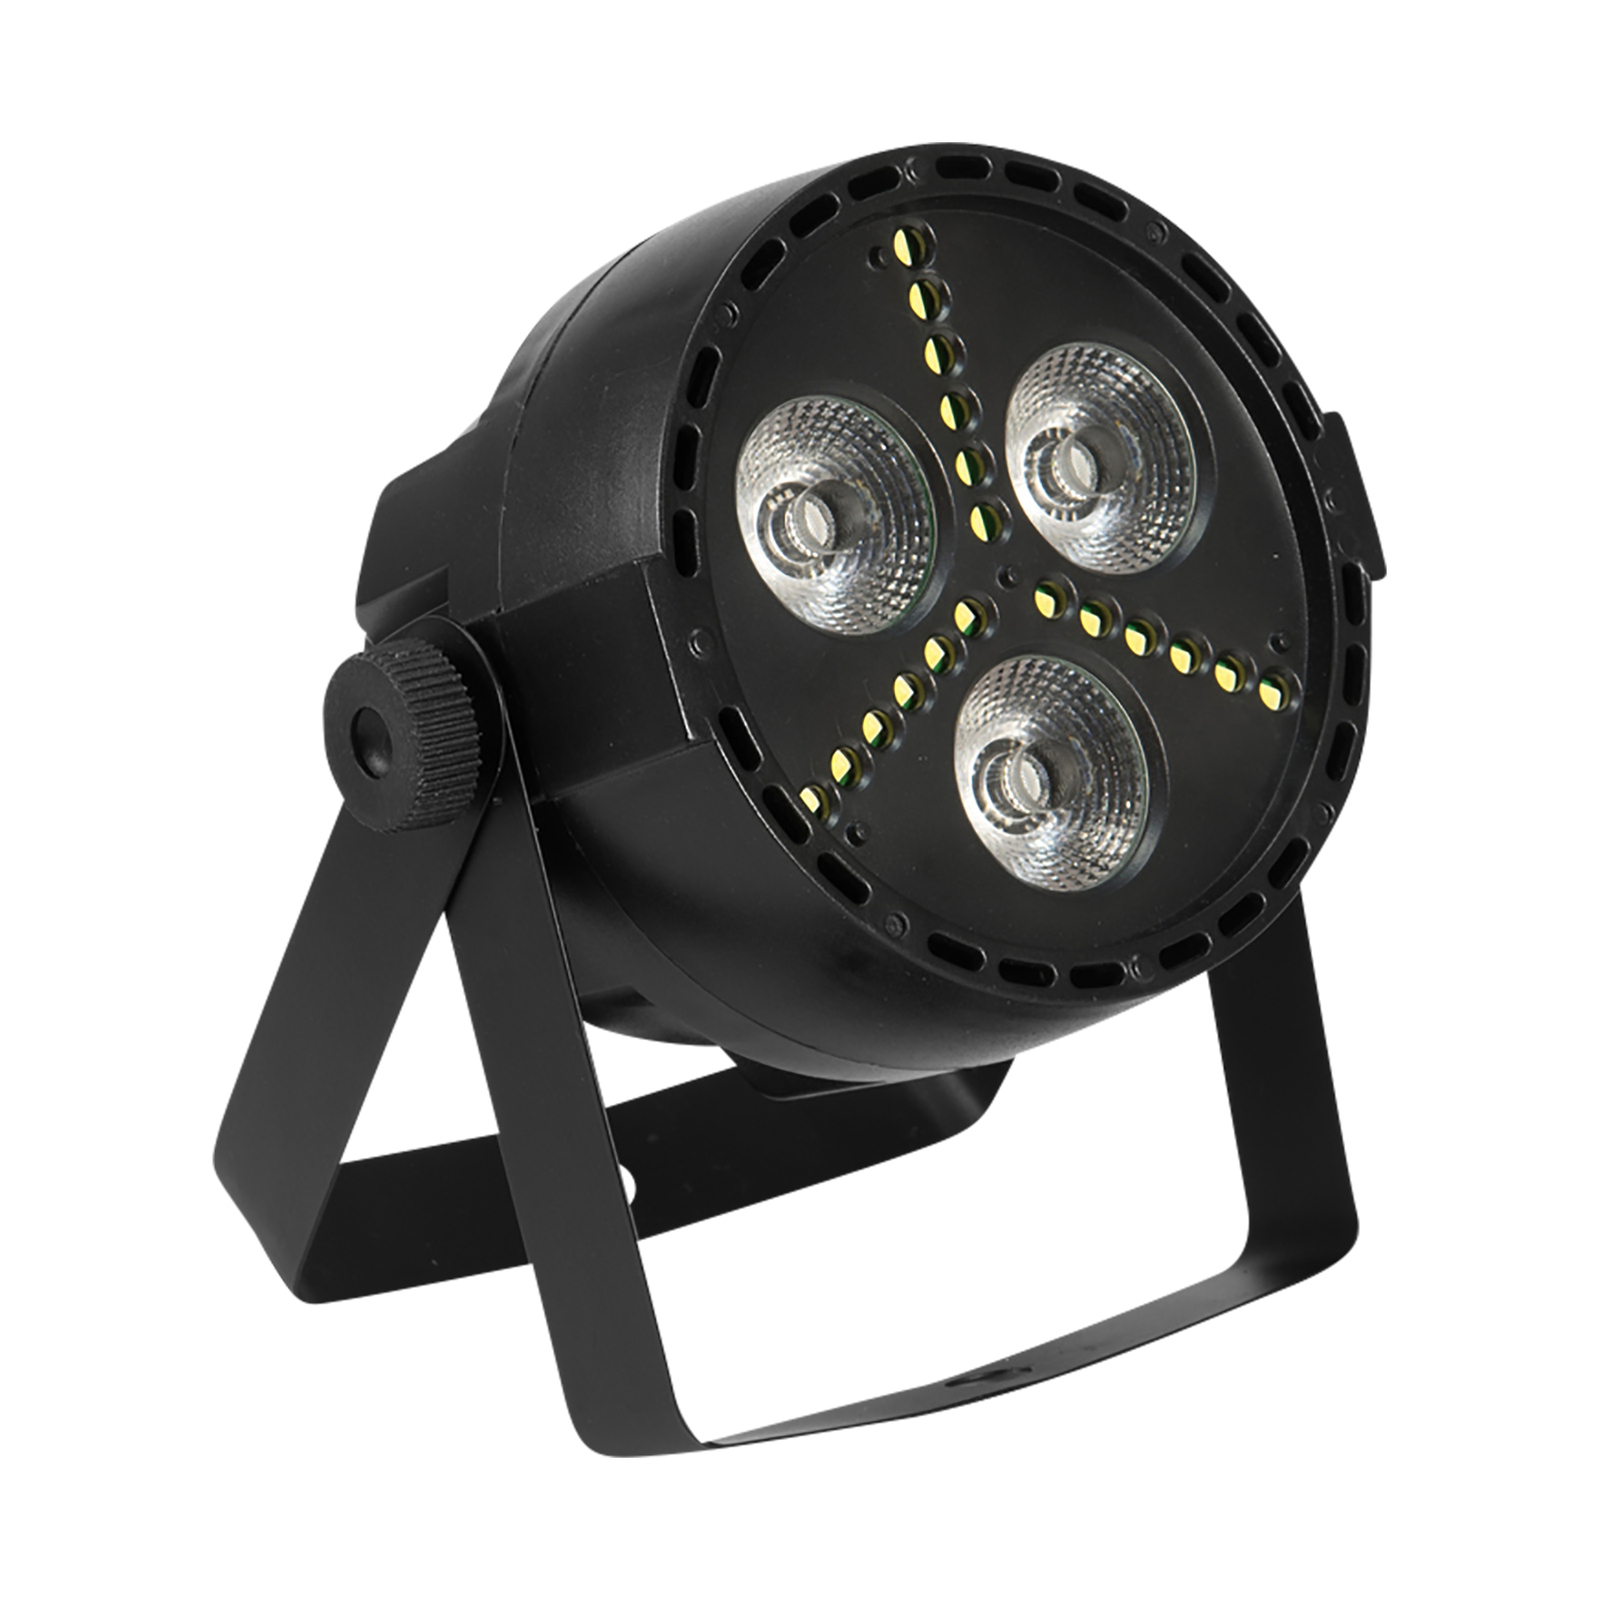 EUROLITE LED PARty Hybrid spot RVB stroboscope